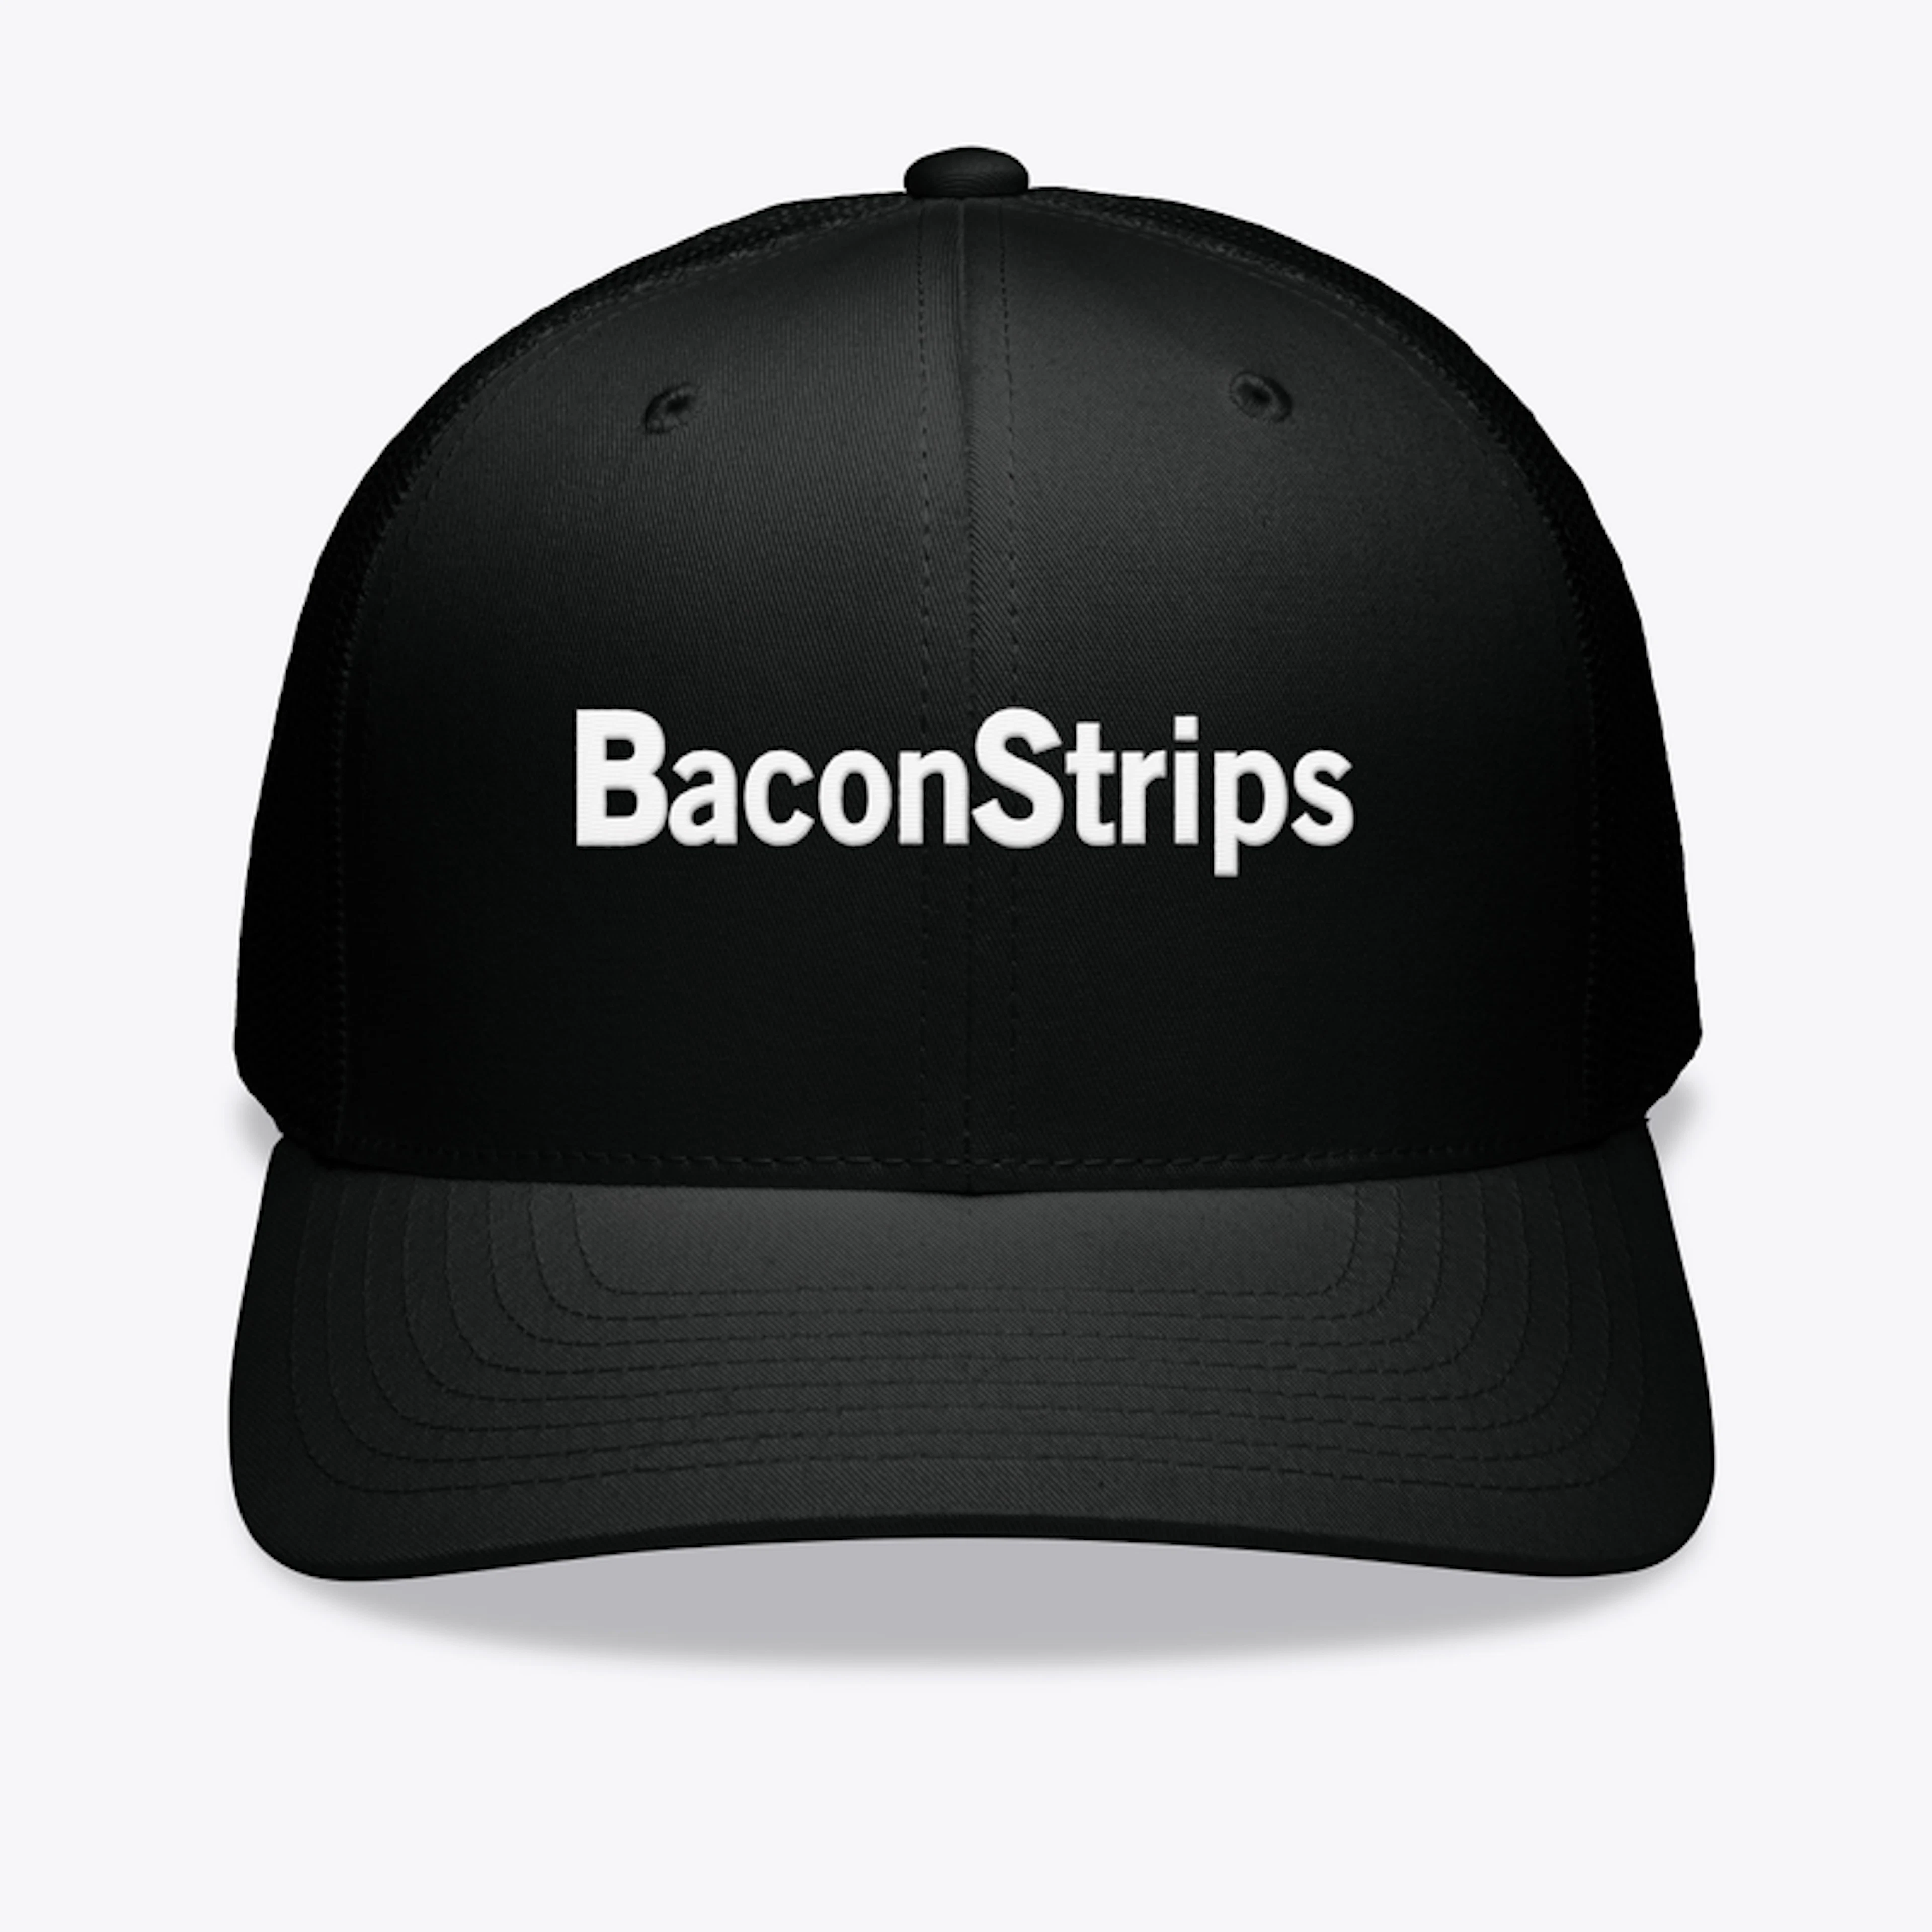 Bacon Strips - Black hats